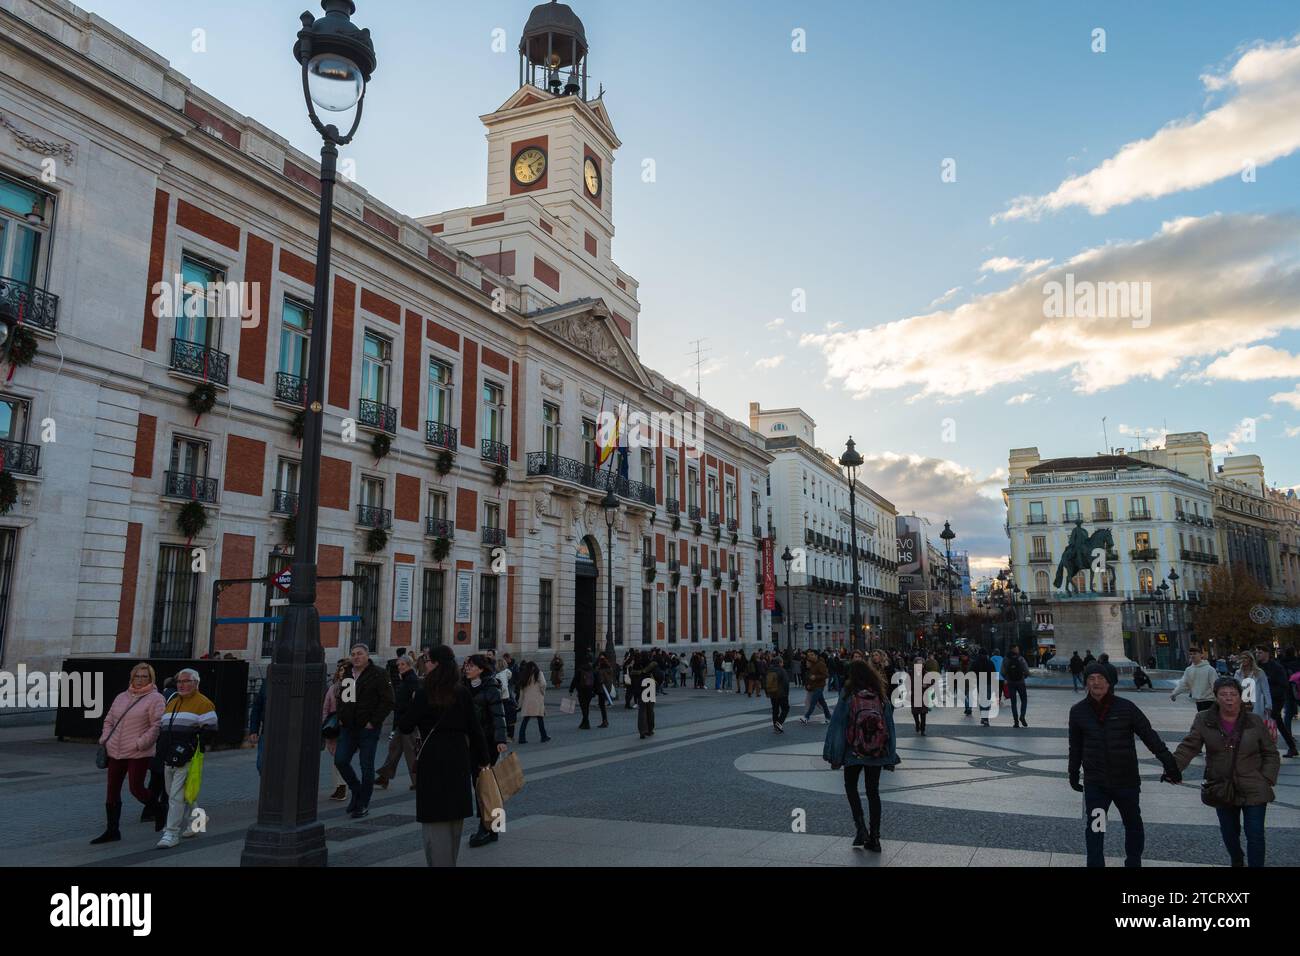 Place Puerta del sol pendant la période de Noël Banque D'Images